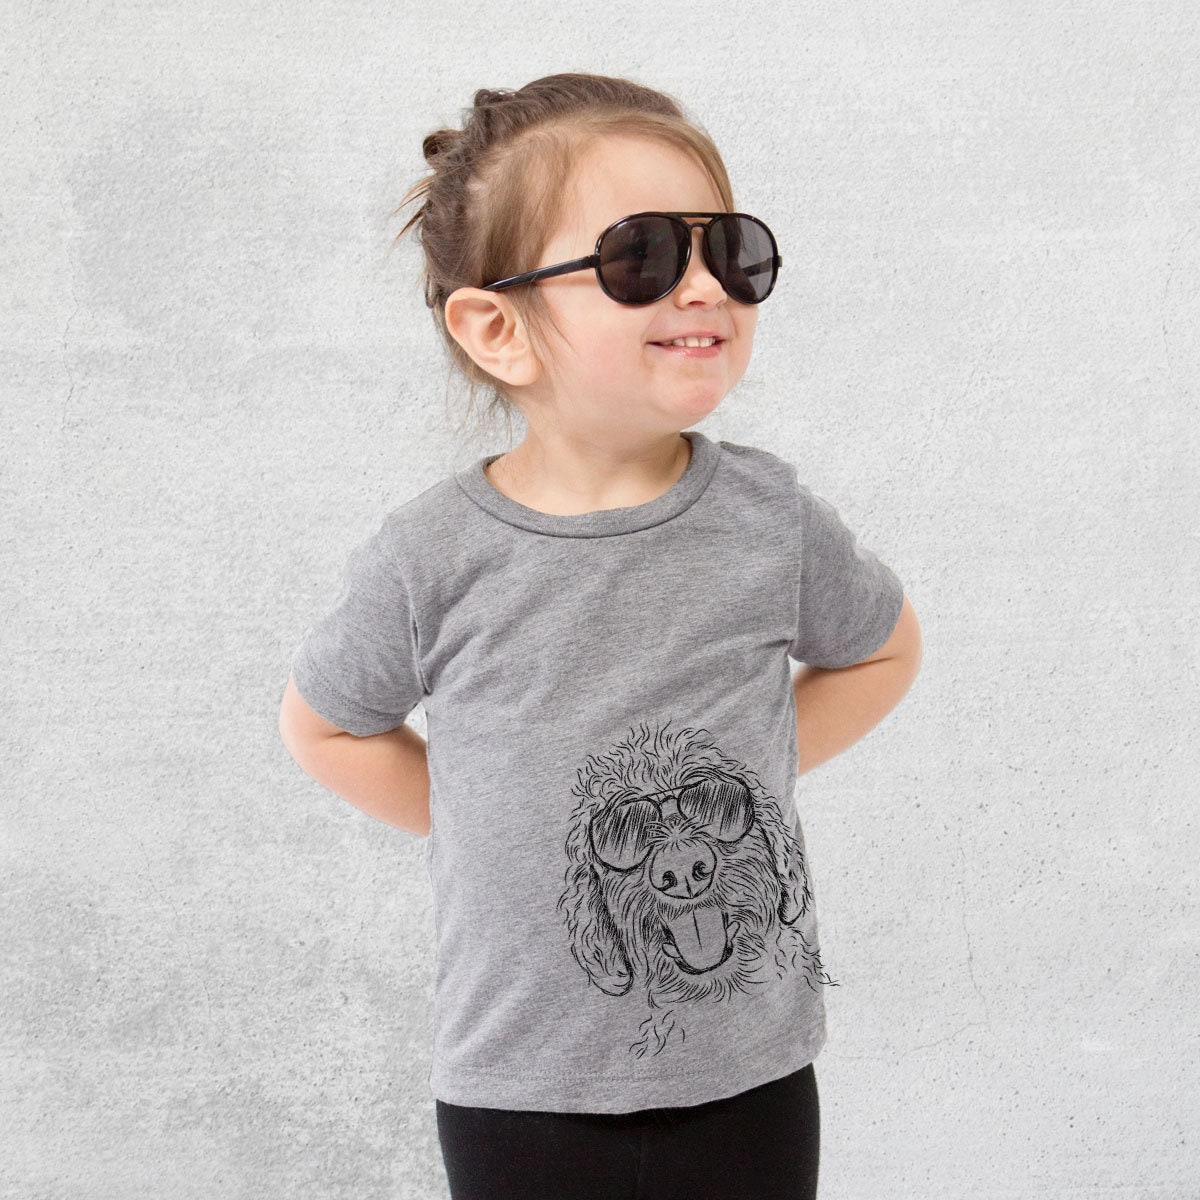 Dixie The Doodle Tri-Blend Shirt - Kids Dog Tshirt Animal Glasses T Children Girl Boy Unisex Clothing